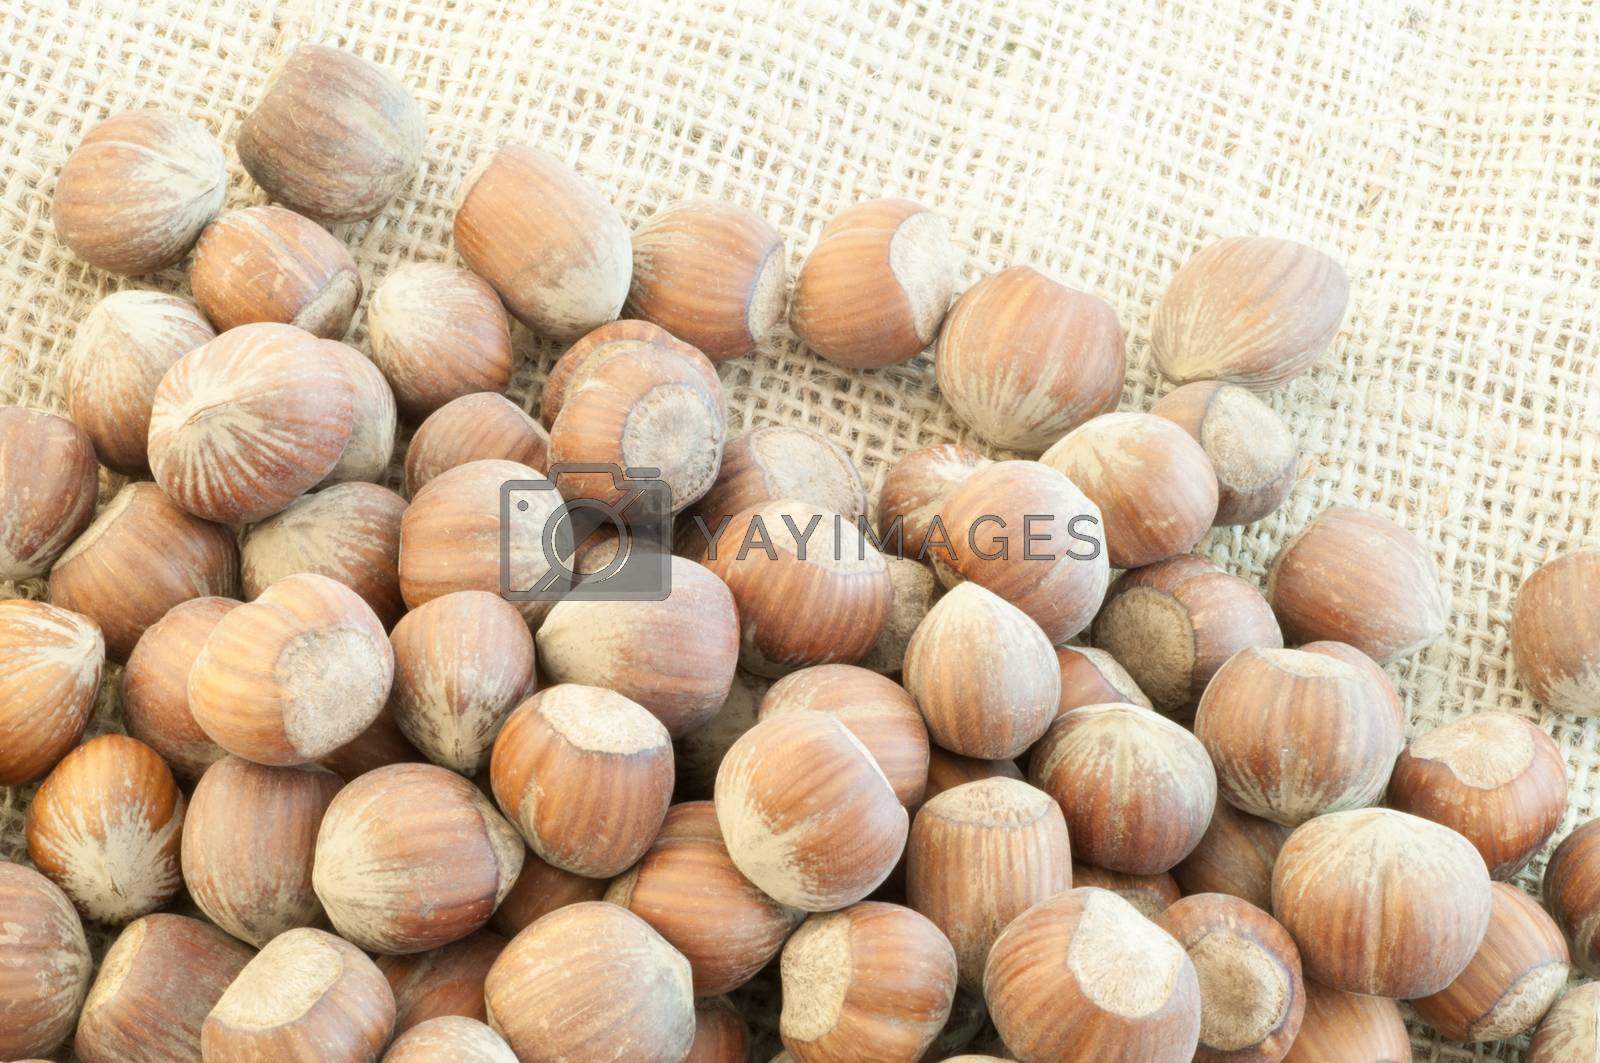 Royalty free image of hazelnuts by fcarniani